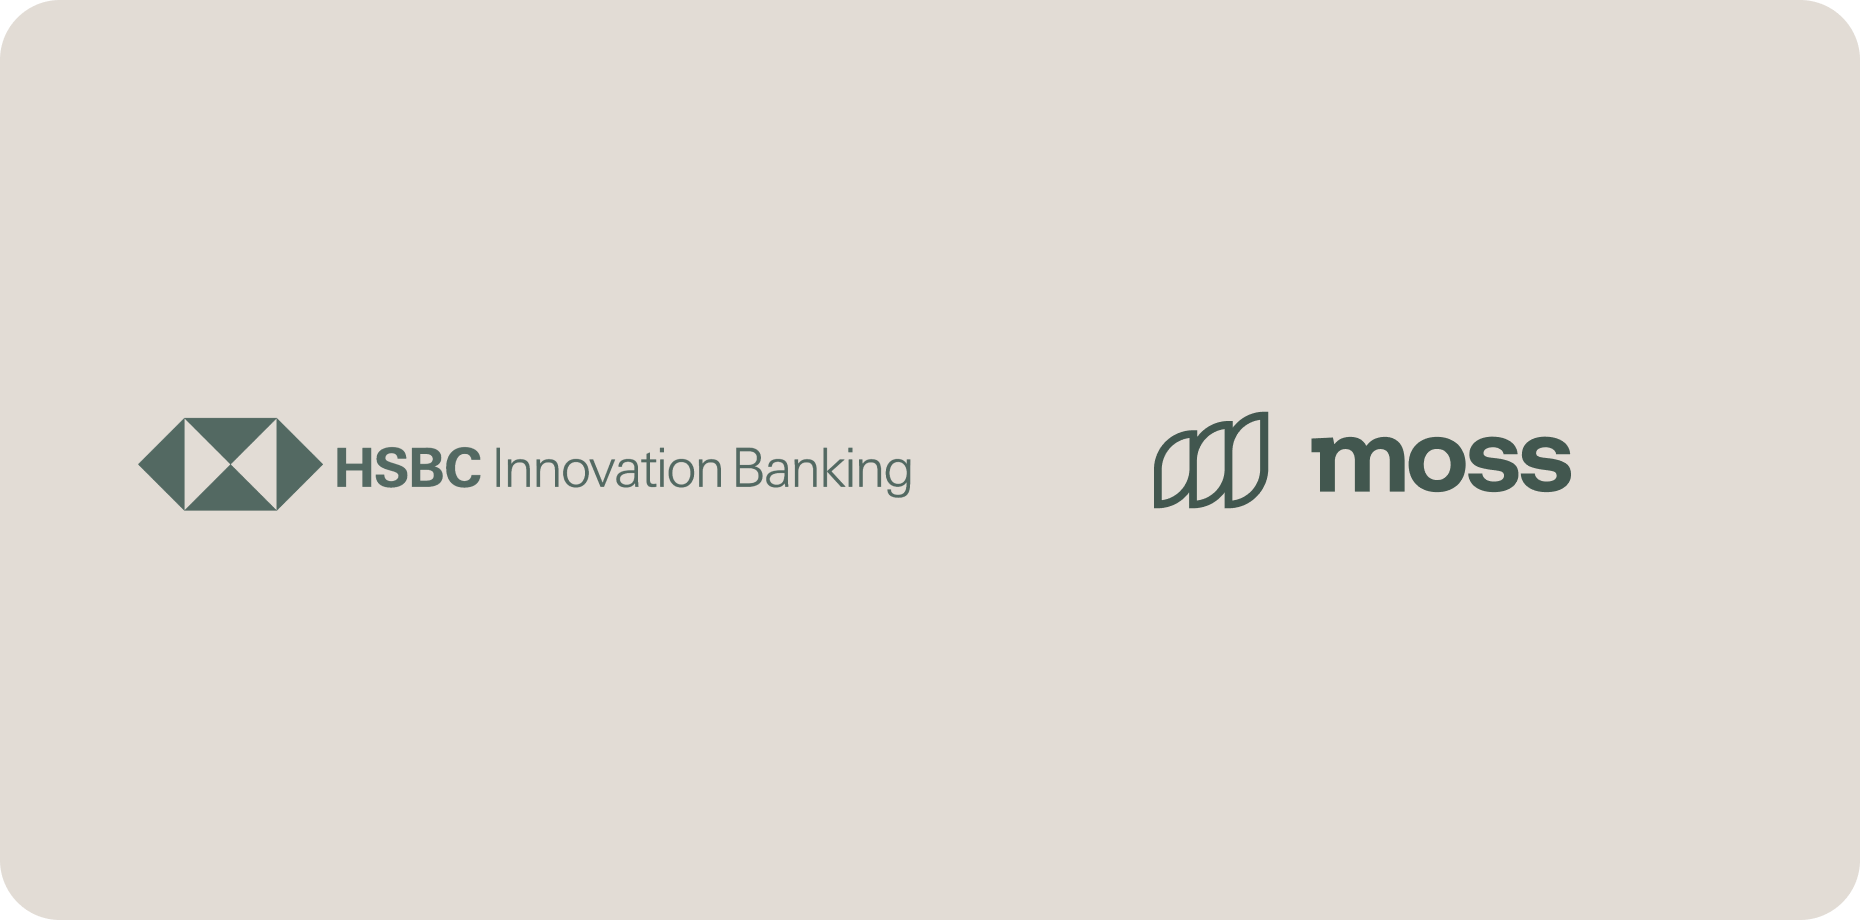 HSBC Innovation Banking and Moss logos